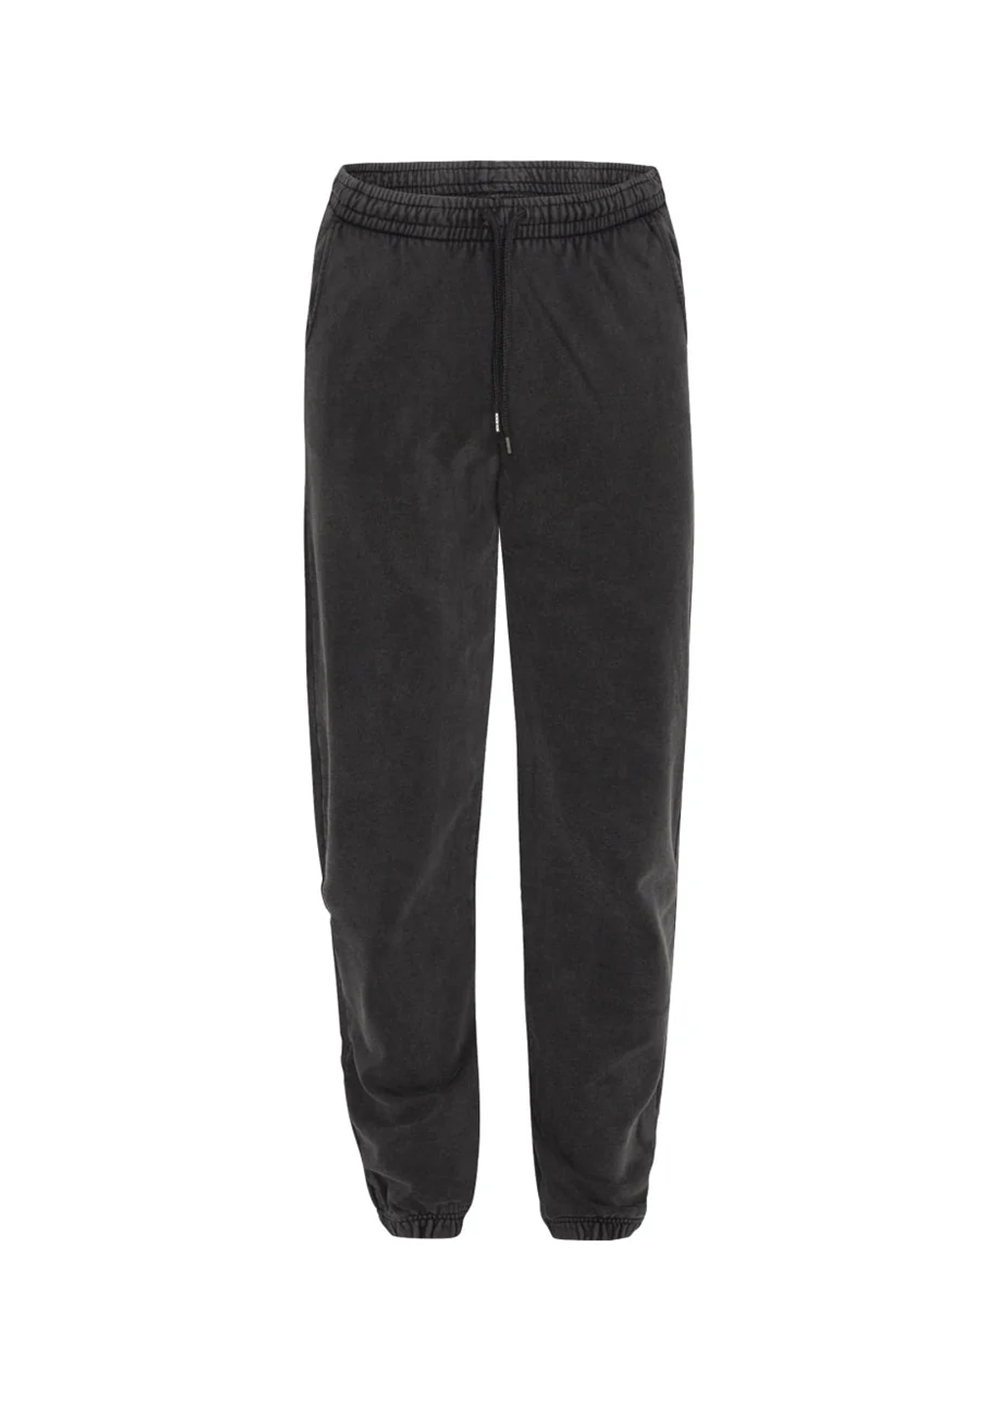 Organic Sweatpants - Faded Black - Colorful Standard Canada - Danali